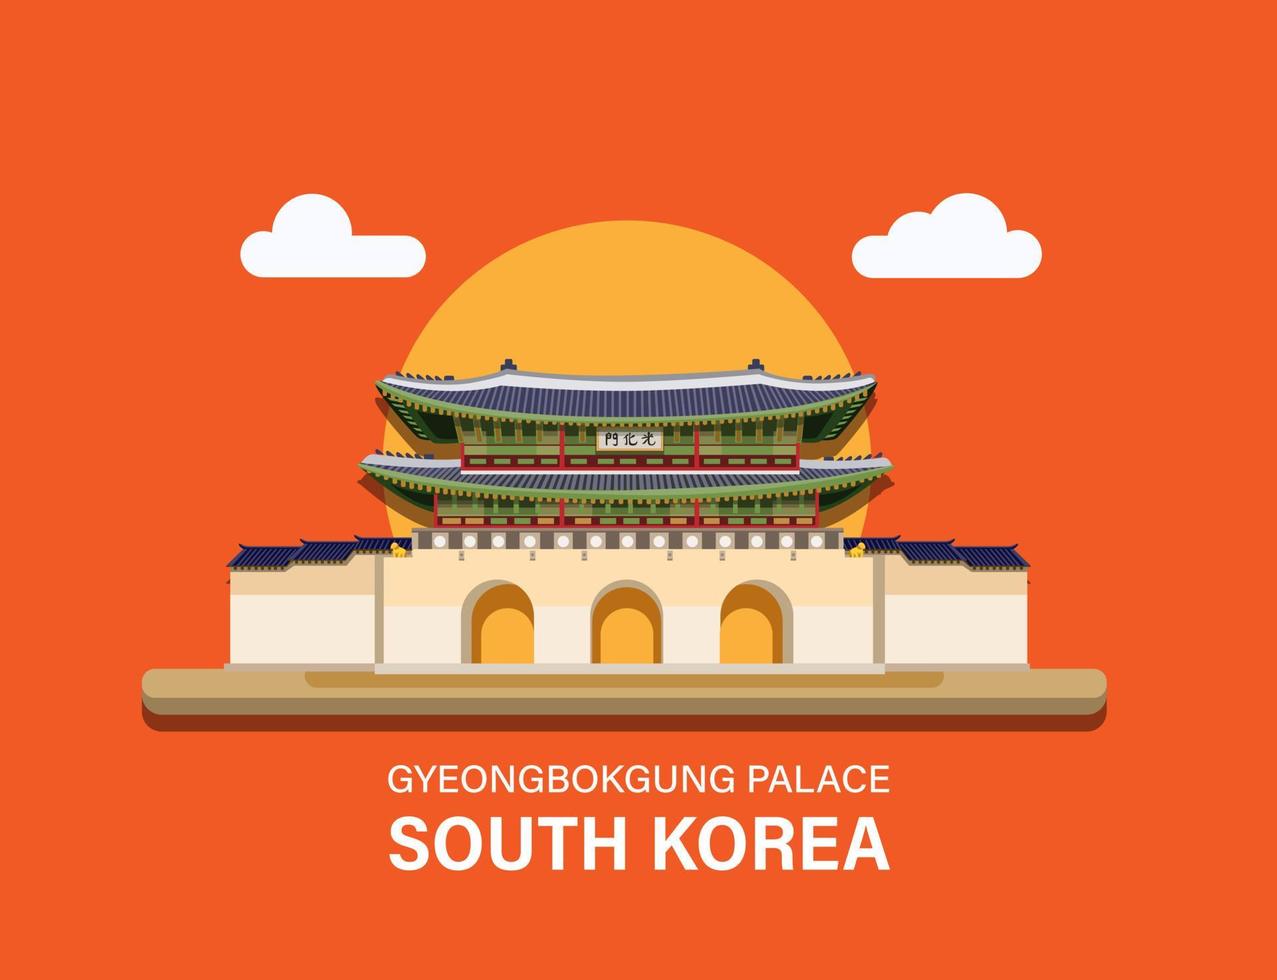 gyeongbokgung palace, south korea landmark building symbol concept illustration vector